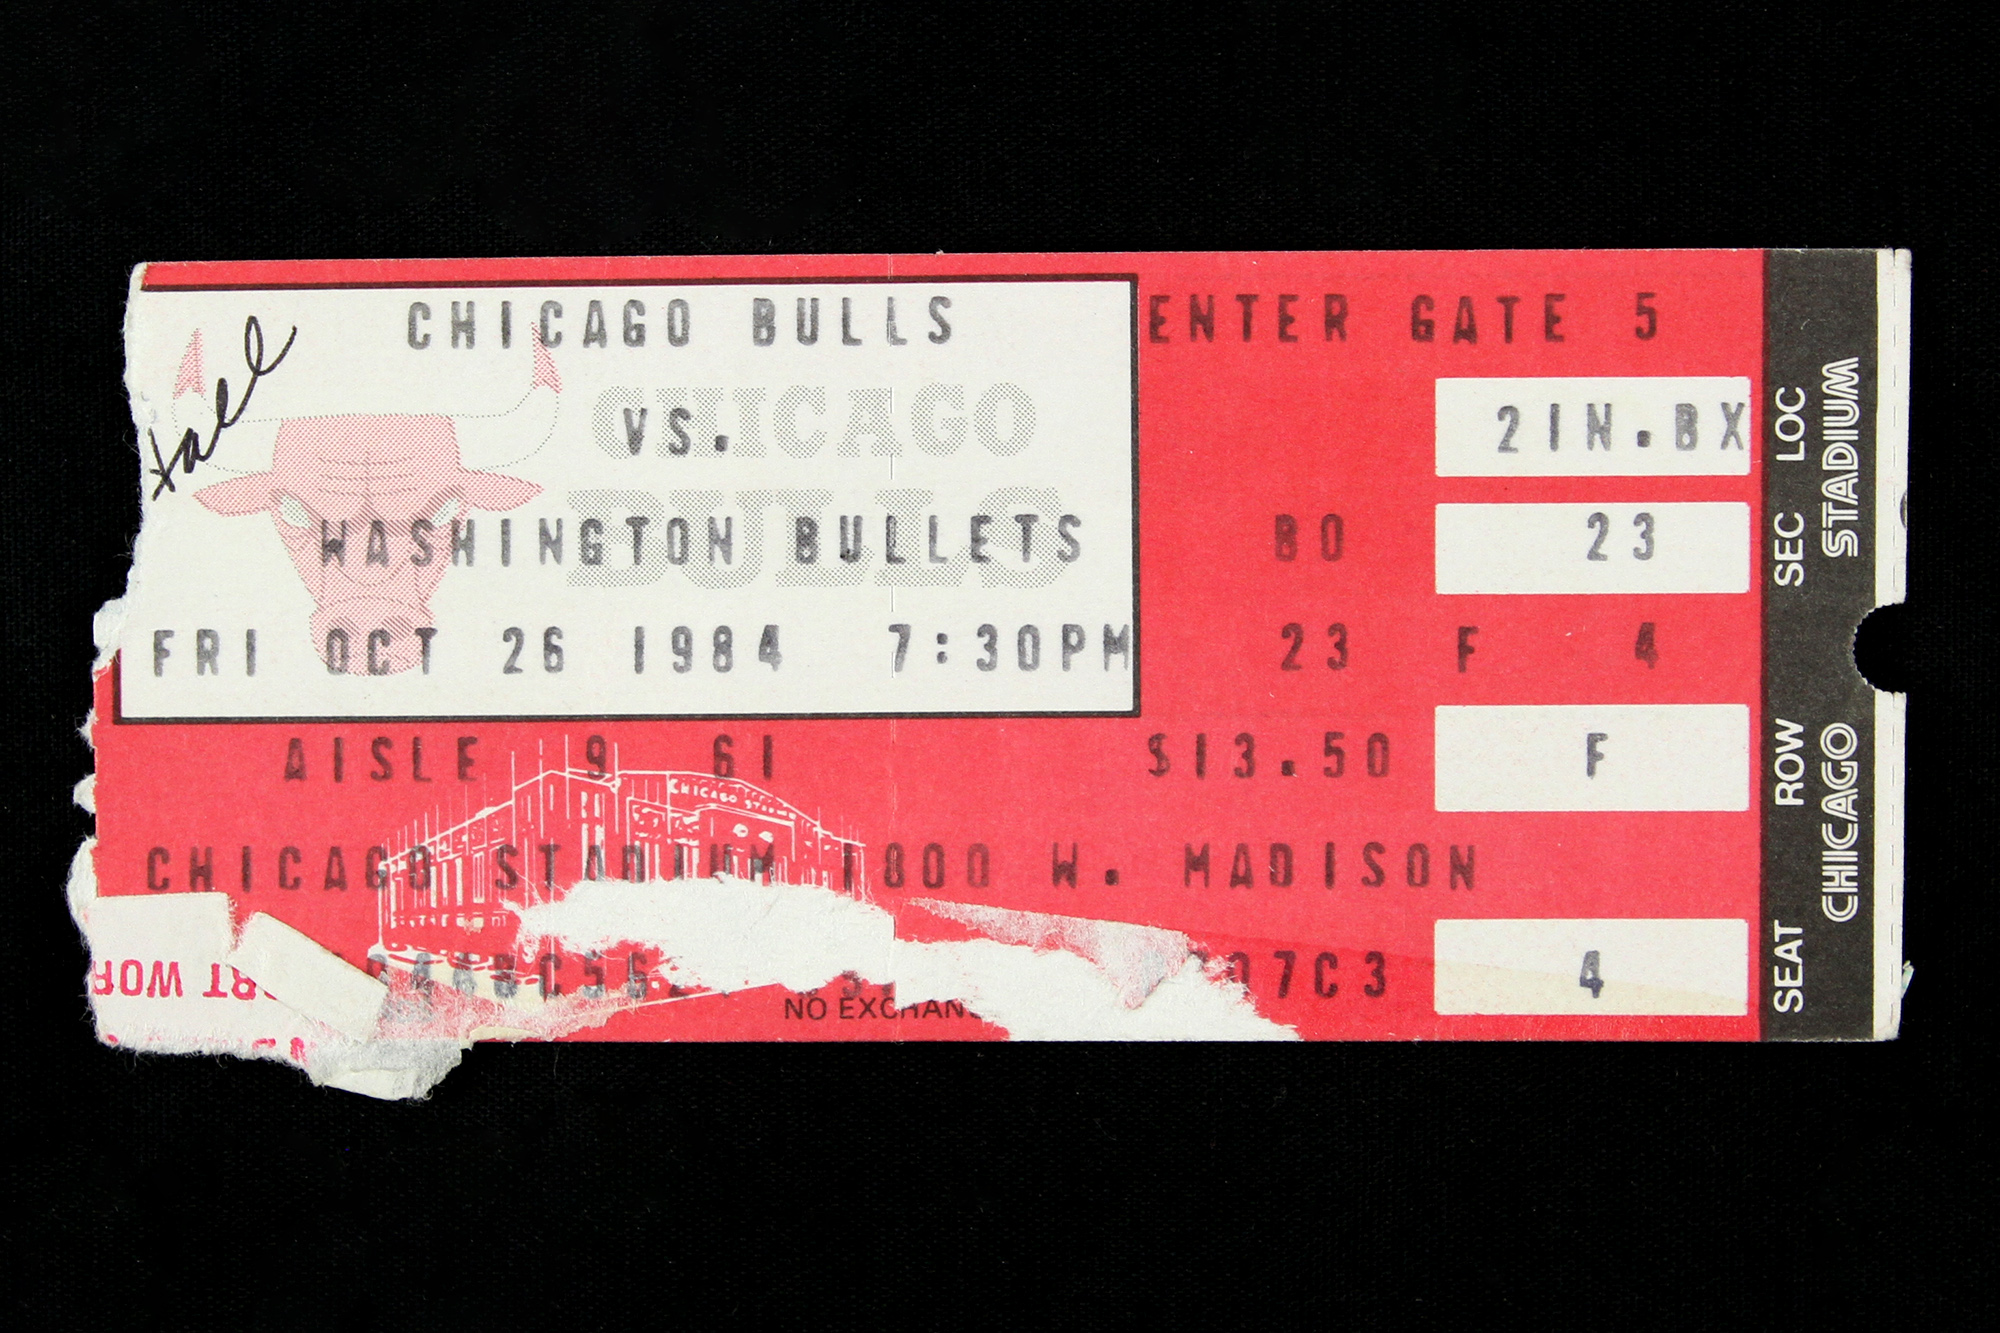 Ticket stub to Michael Jordan's Chicago Bulls debut sold at